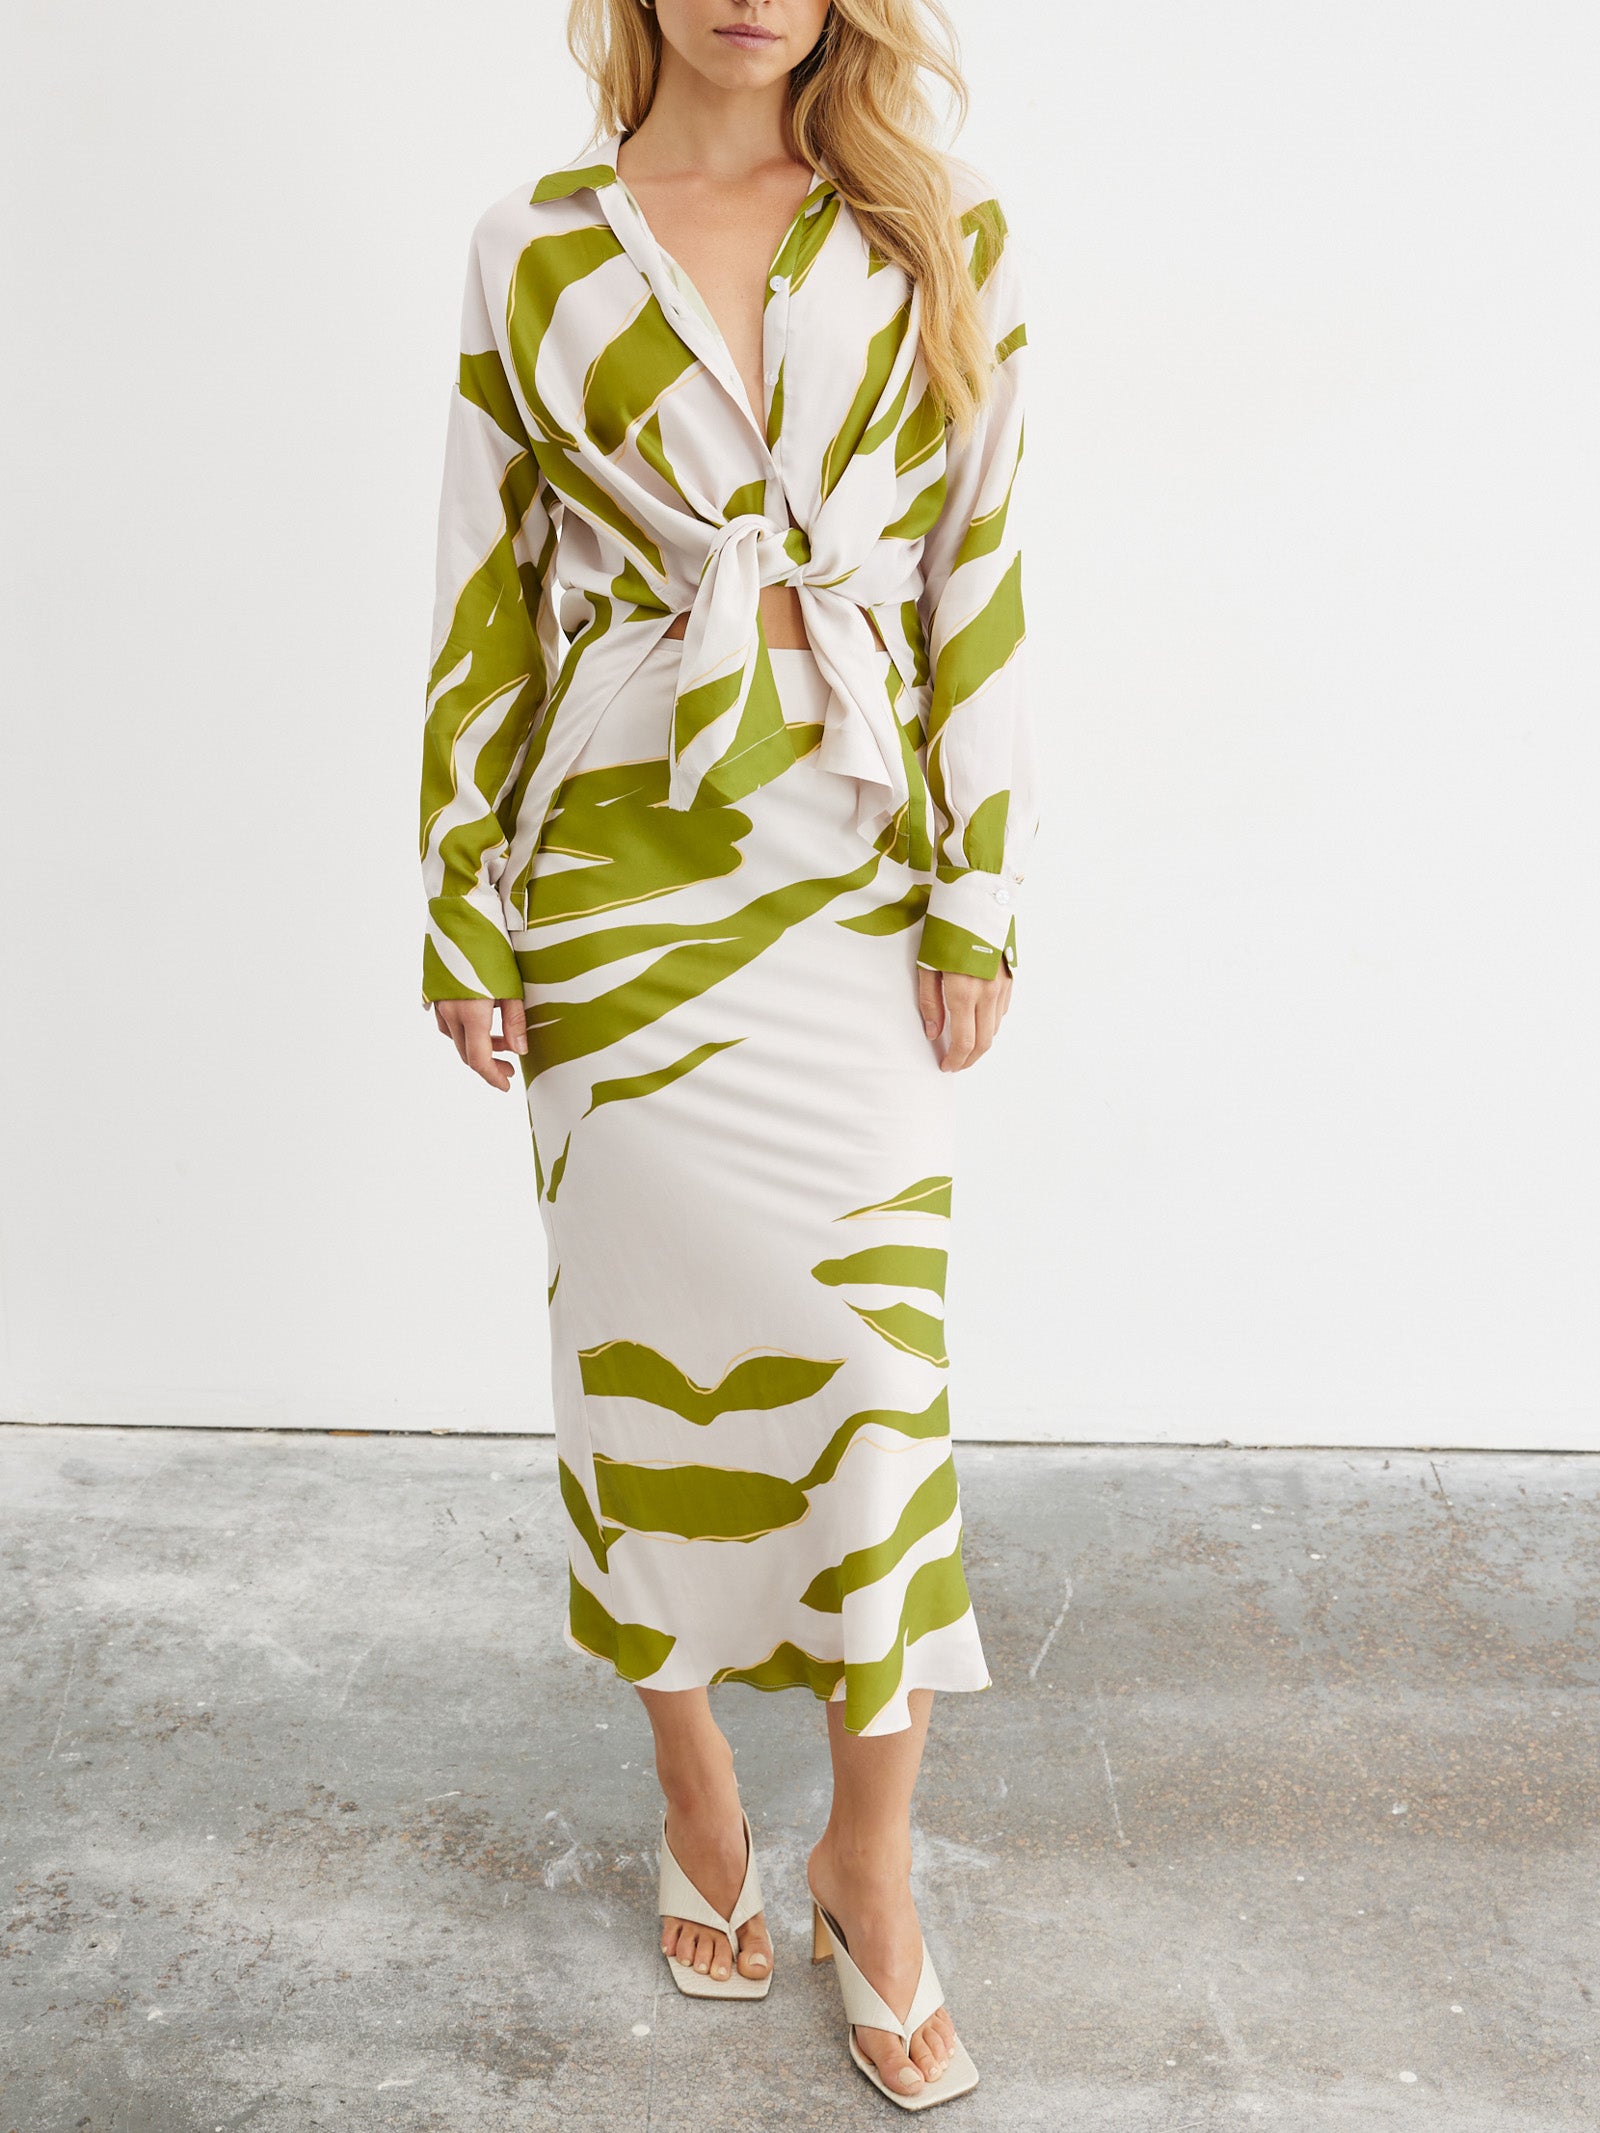 Motion Bias Slip Skirt in Chalk White & Olive Green Print - Glue Store